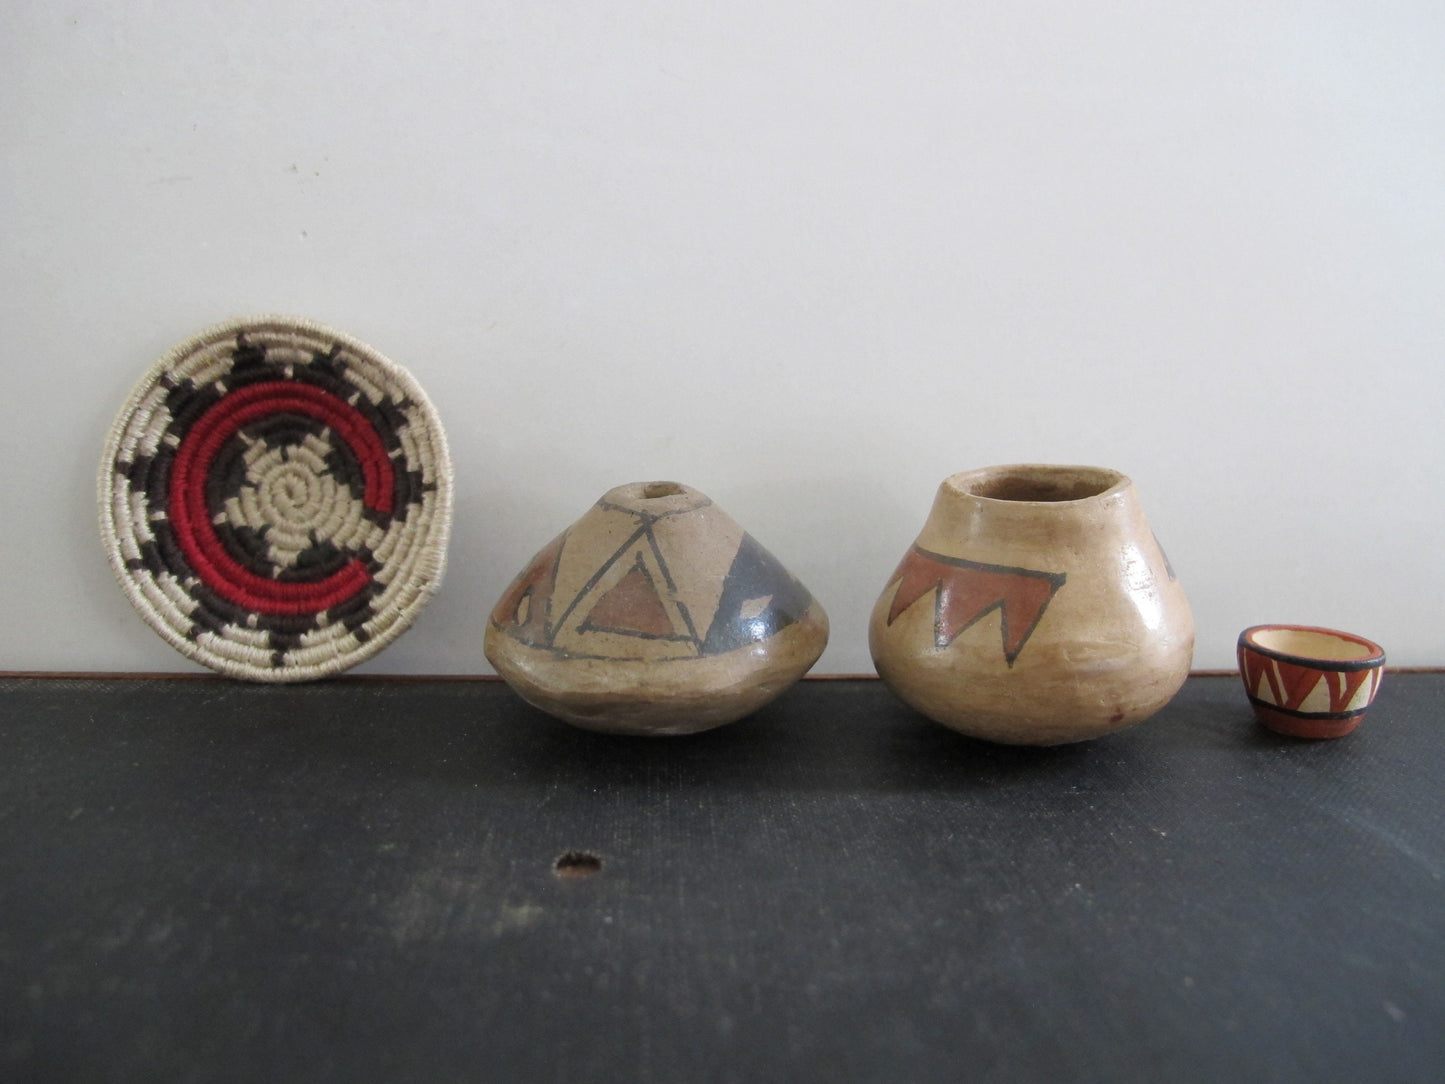 Miniature Native American Southwest Pottery and Basket Artist Signed Tere de Ortize Neno LO 1970s Four Pieces